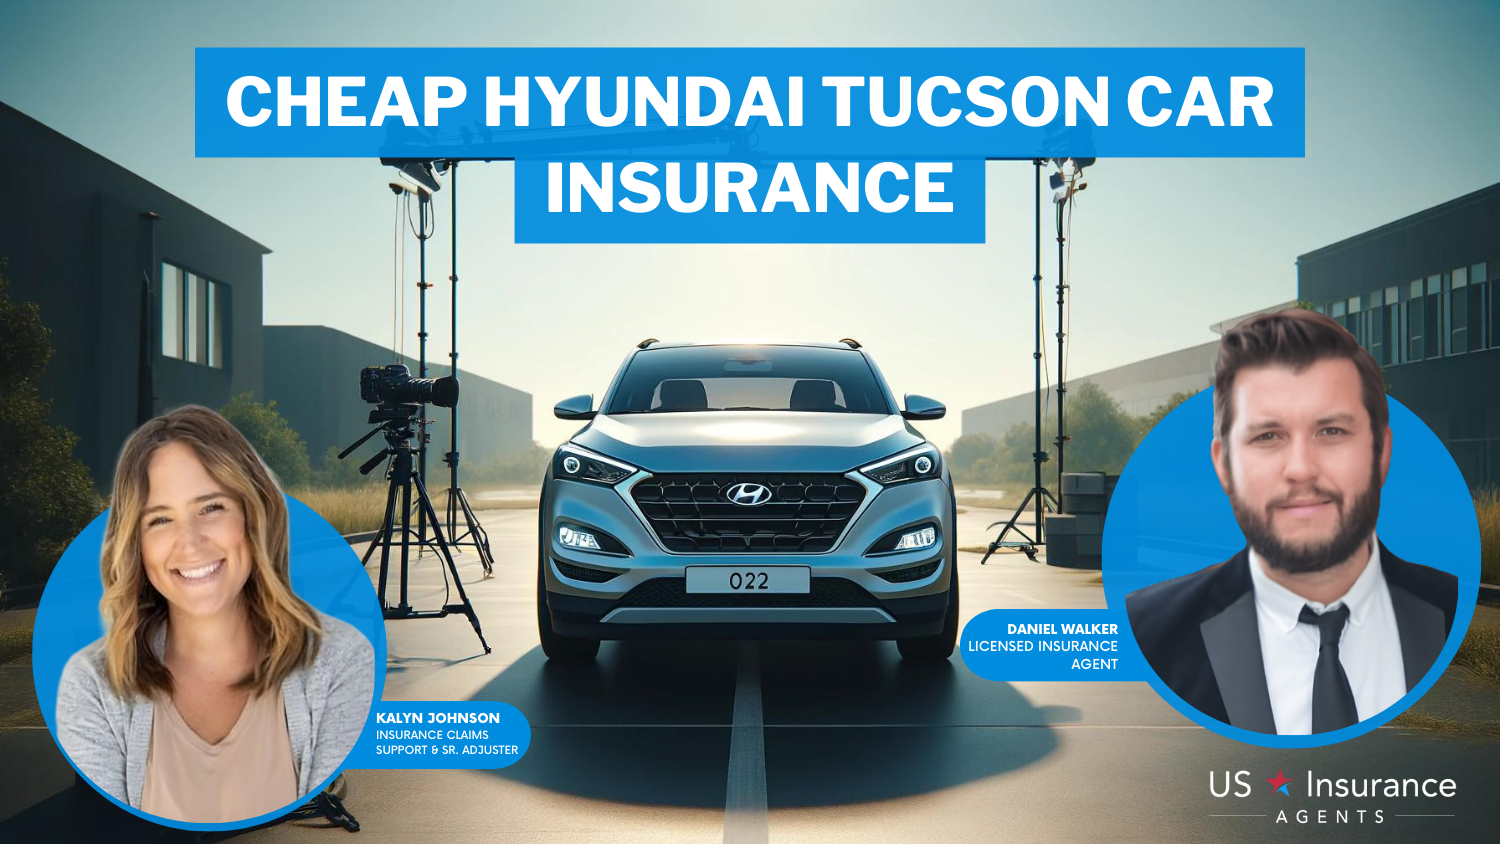 Cheap Hyundai Tucson Car Insurance: Progressive, State Farm, and USAA